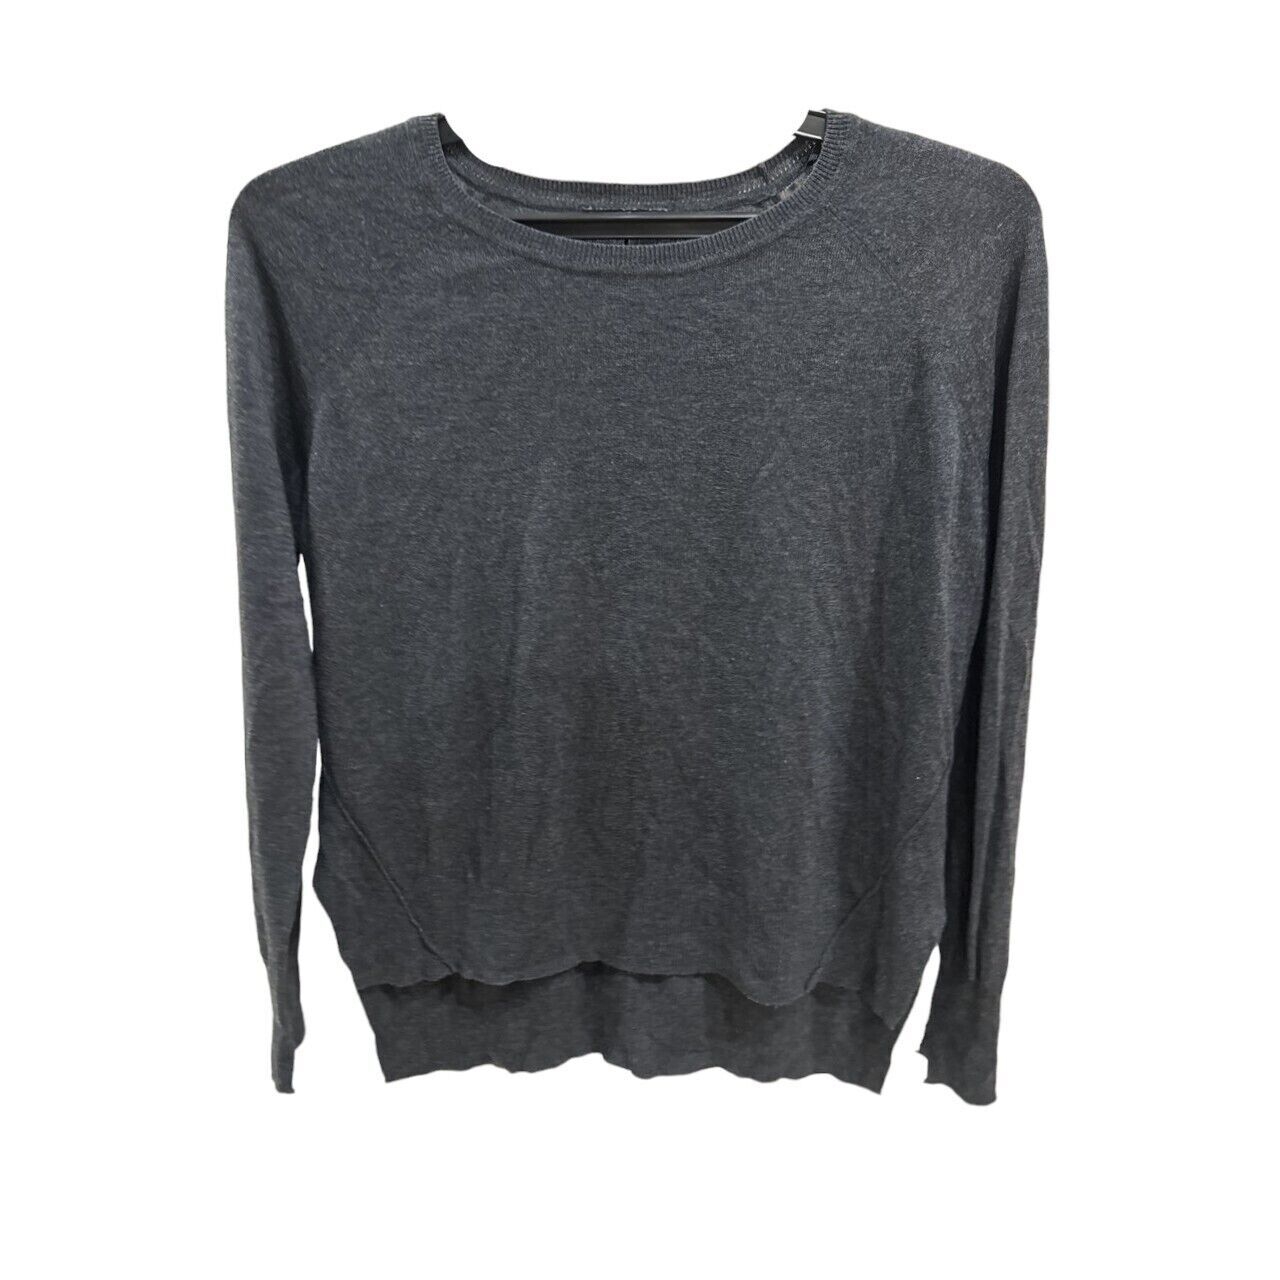 Zara Dark Grey Sweater